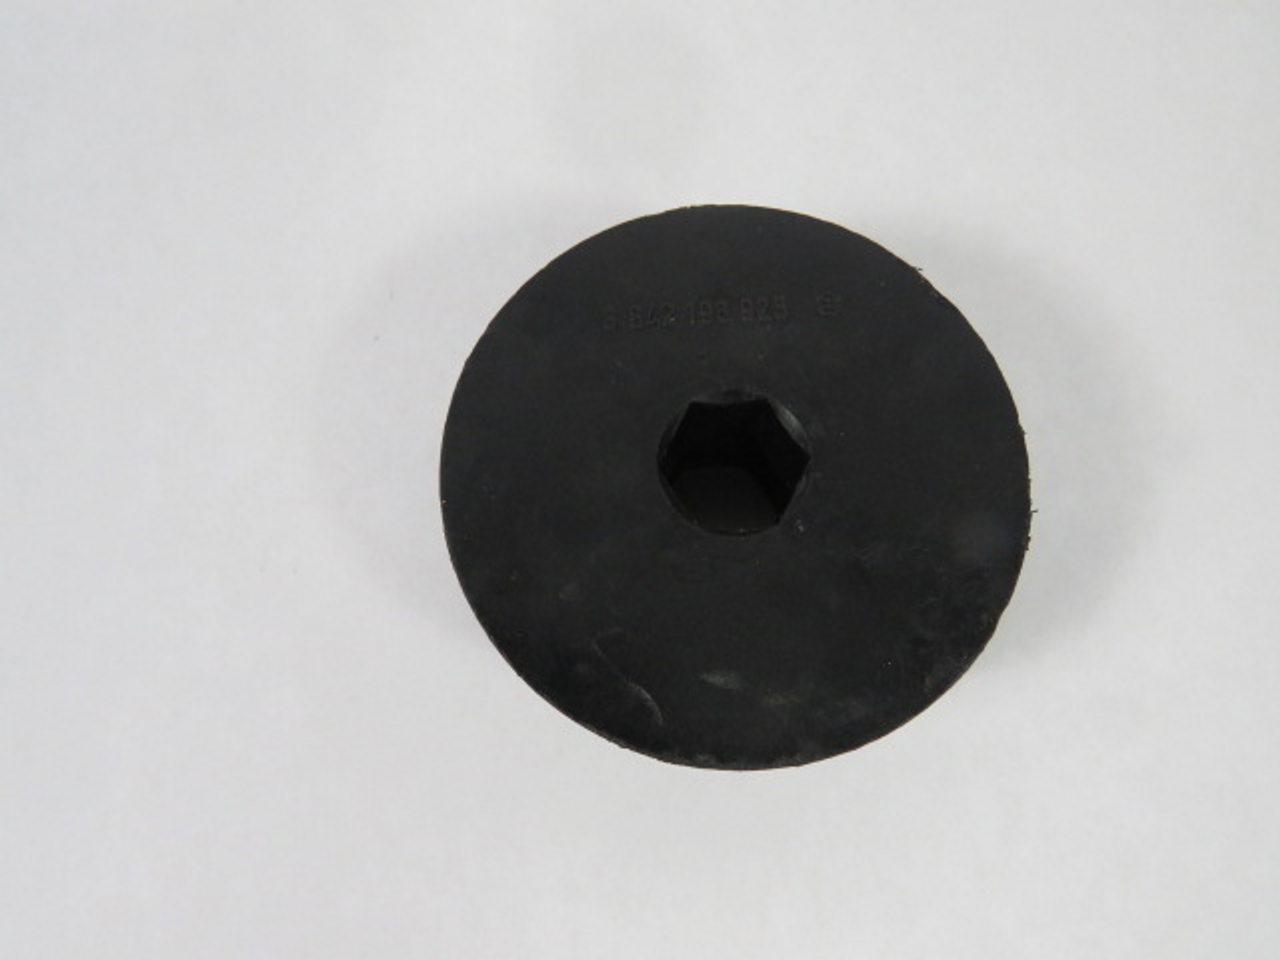 Bosch Rexroth 3842196925 Black Plastic Gearbelt Sprocket/Pulley USED